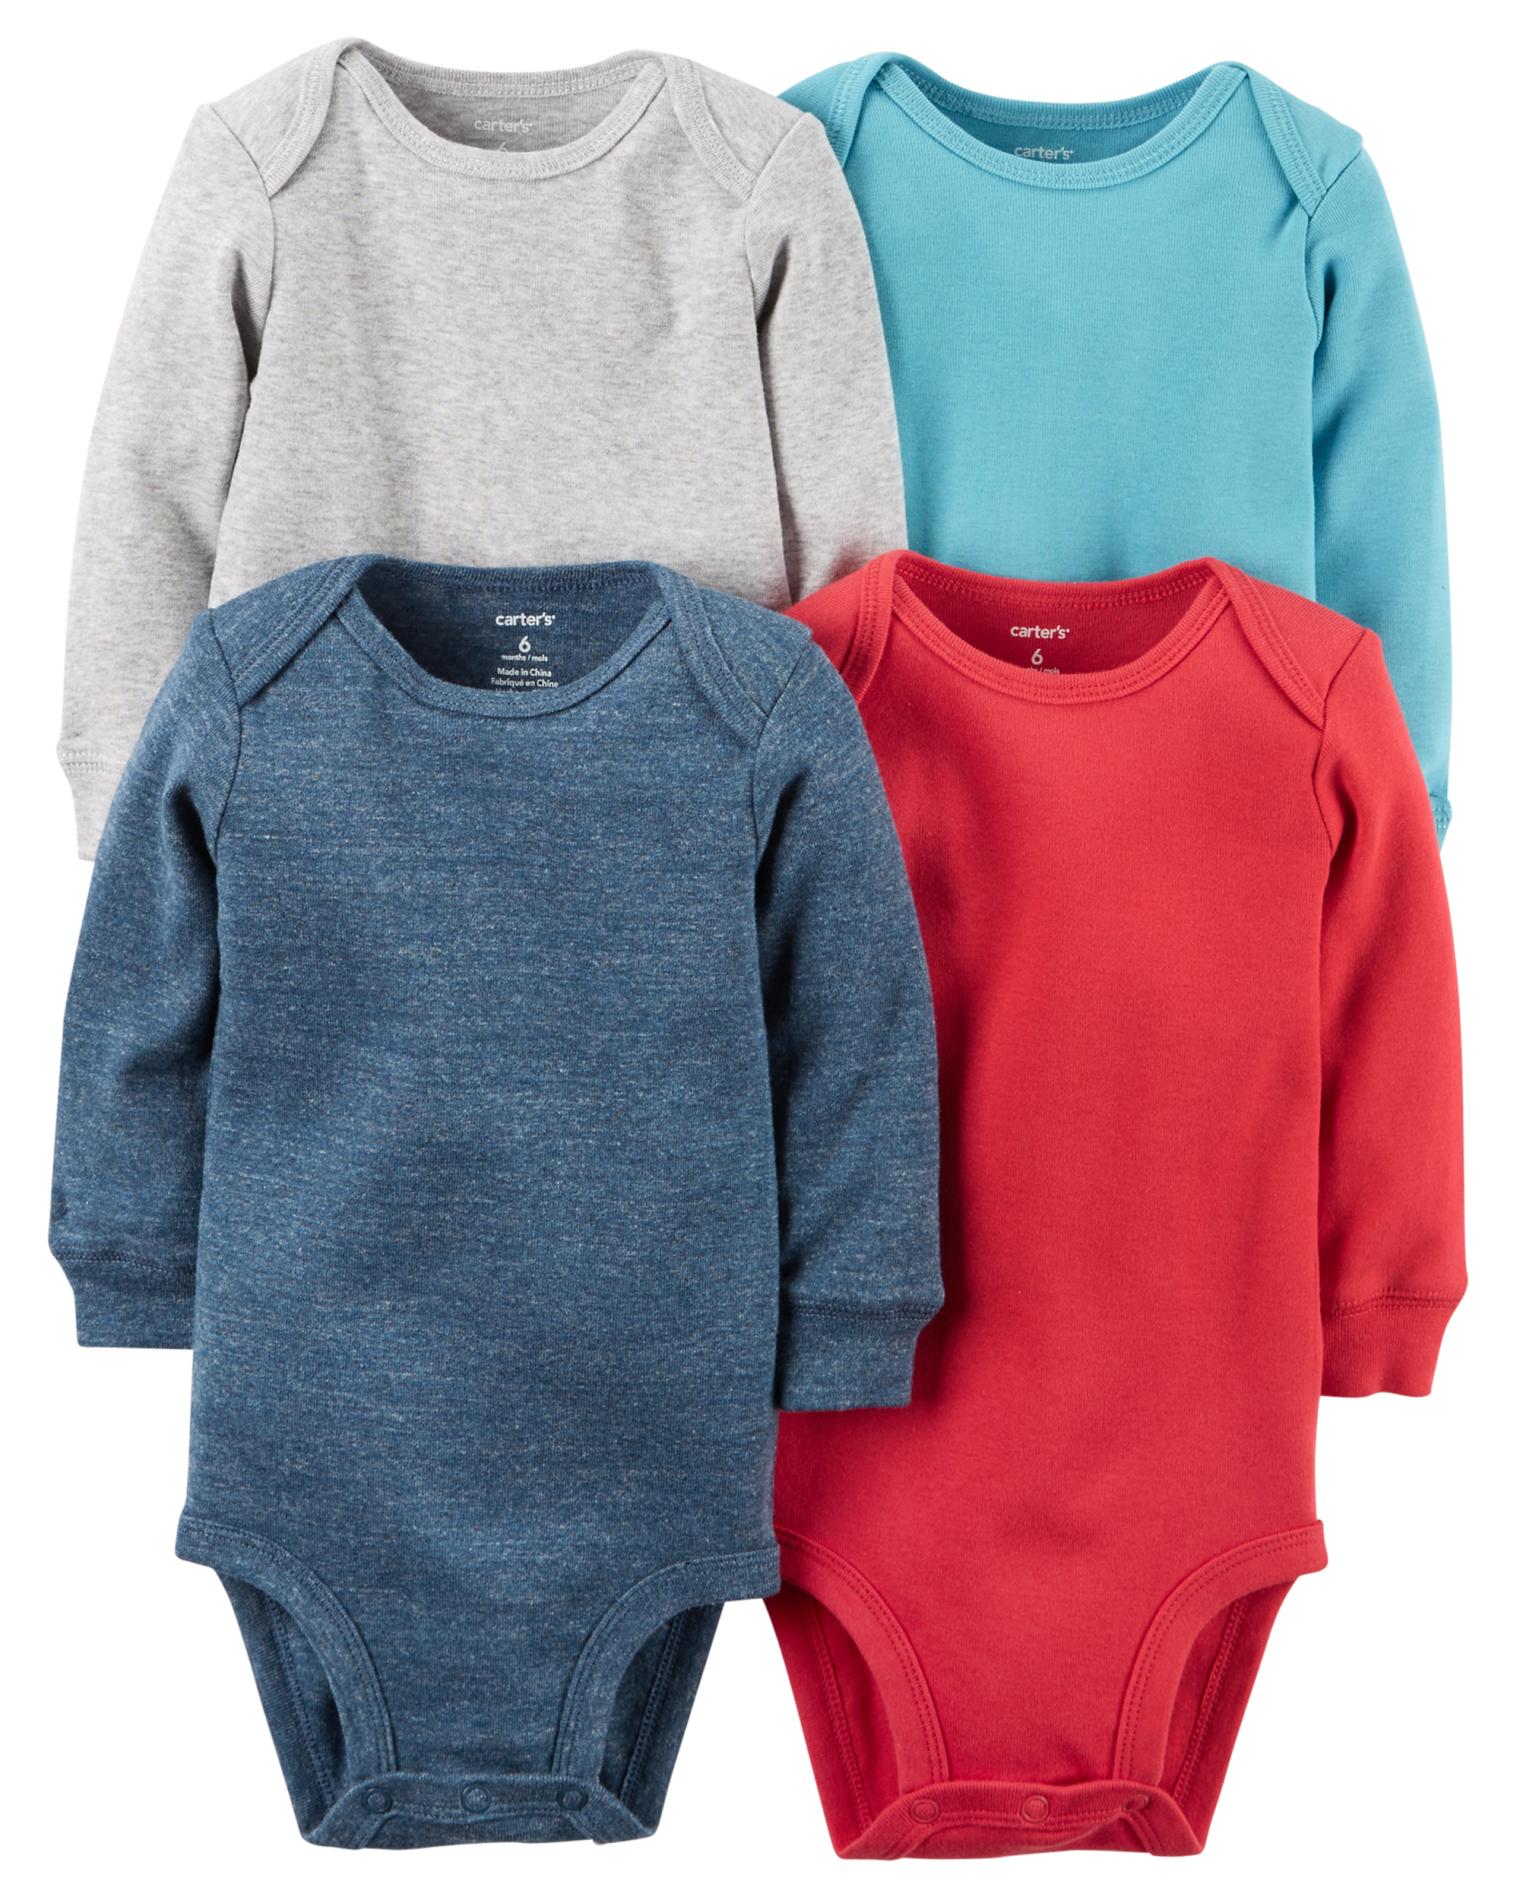 Carter's Newborn & Infant Boys' 4-Pack Long-Sleeve Bodysuits